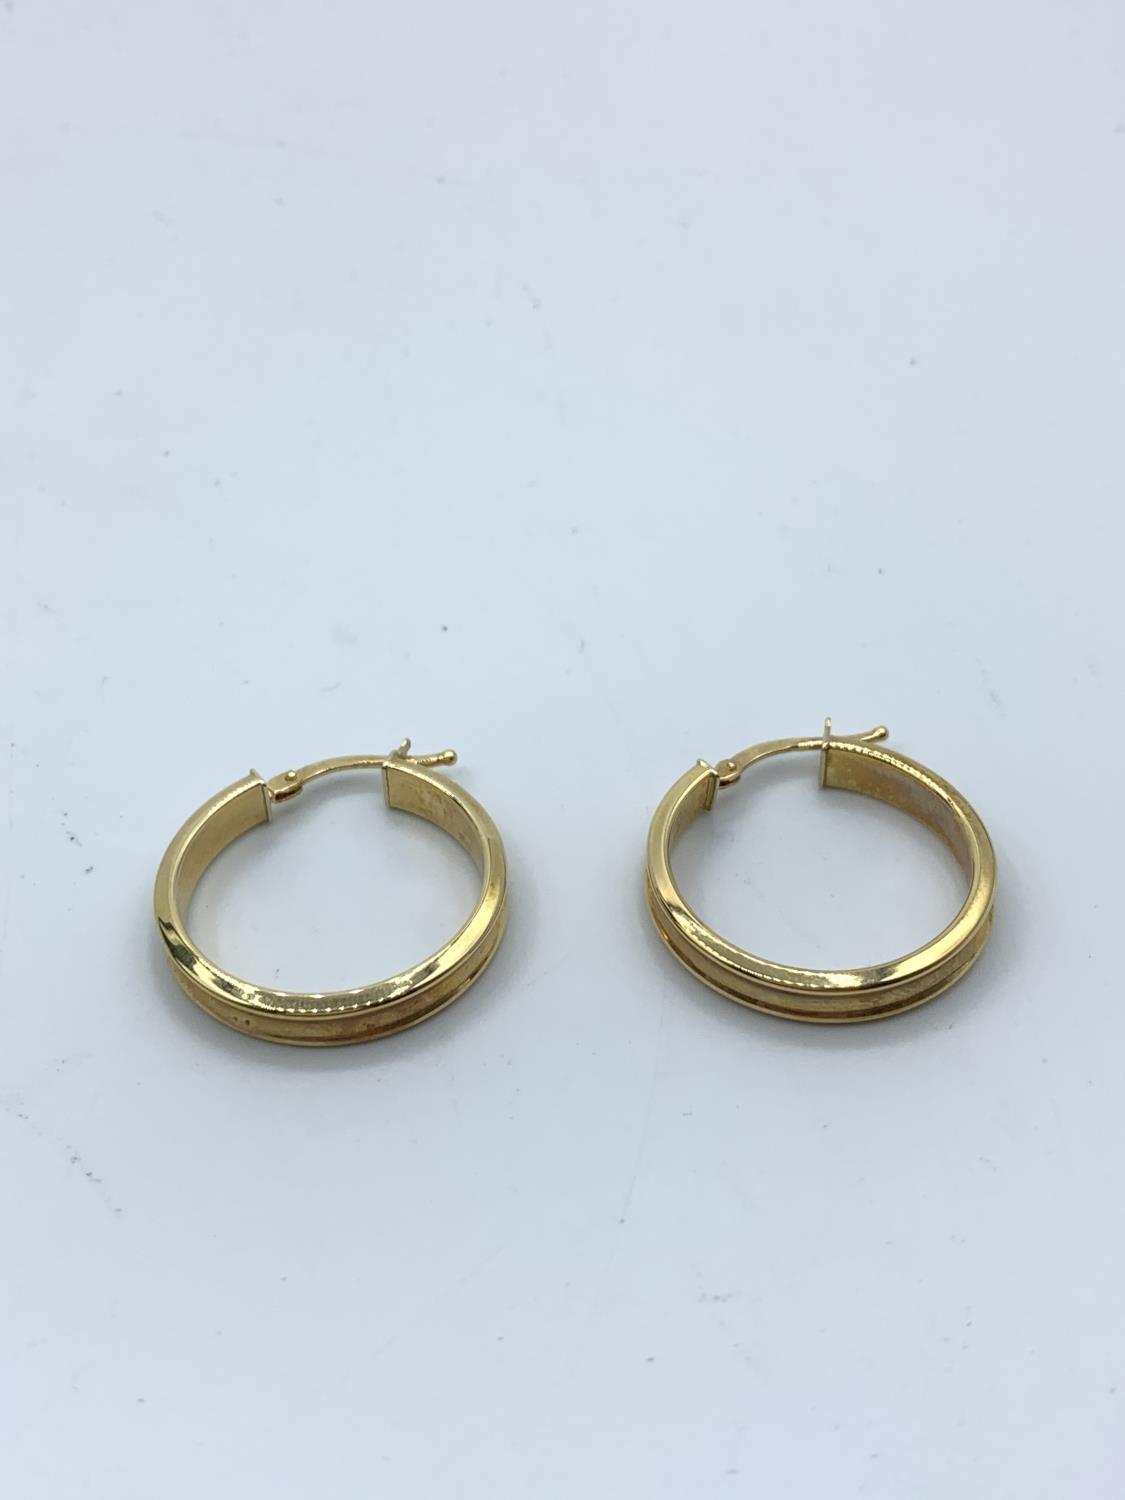 Pair of 18K Yellow Gold Hoop Earrings in original presentation box, weight 2.2g and 2cm diameter - Image 5 of 10